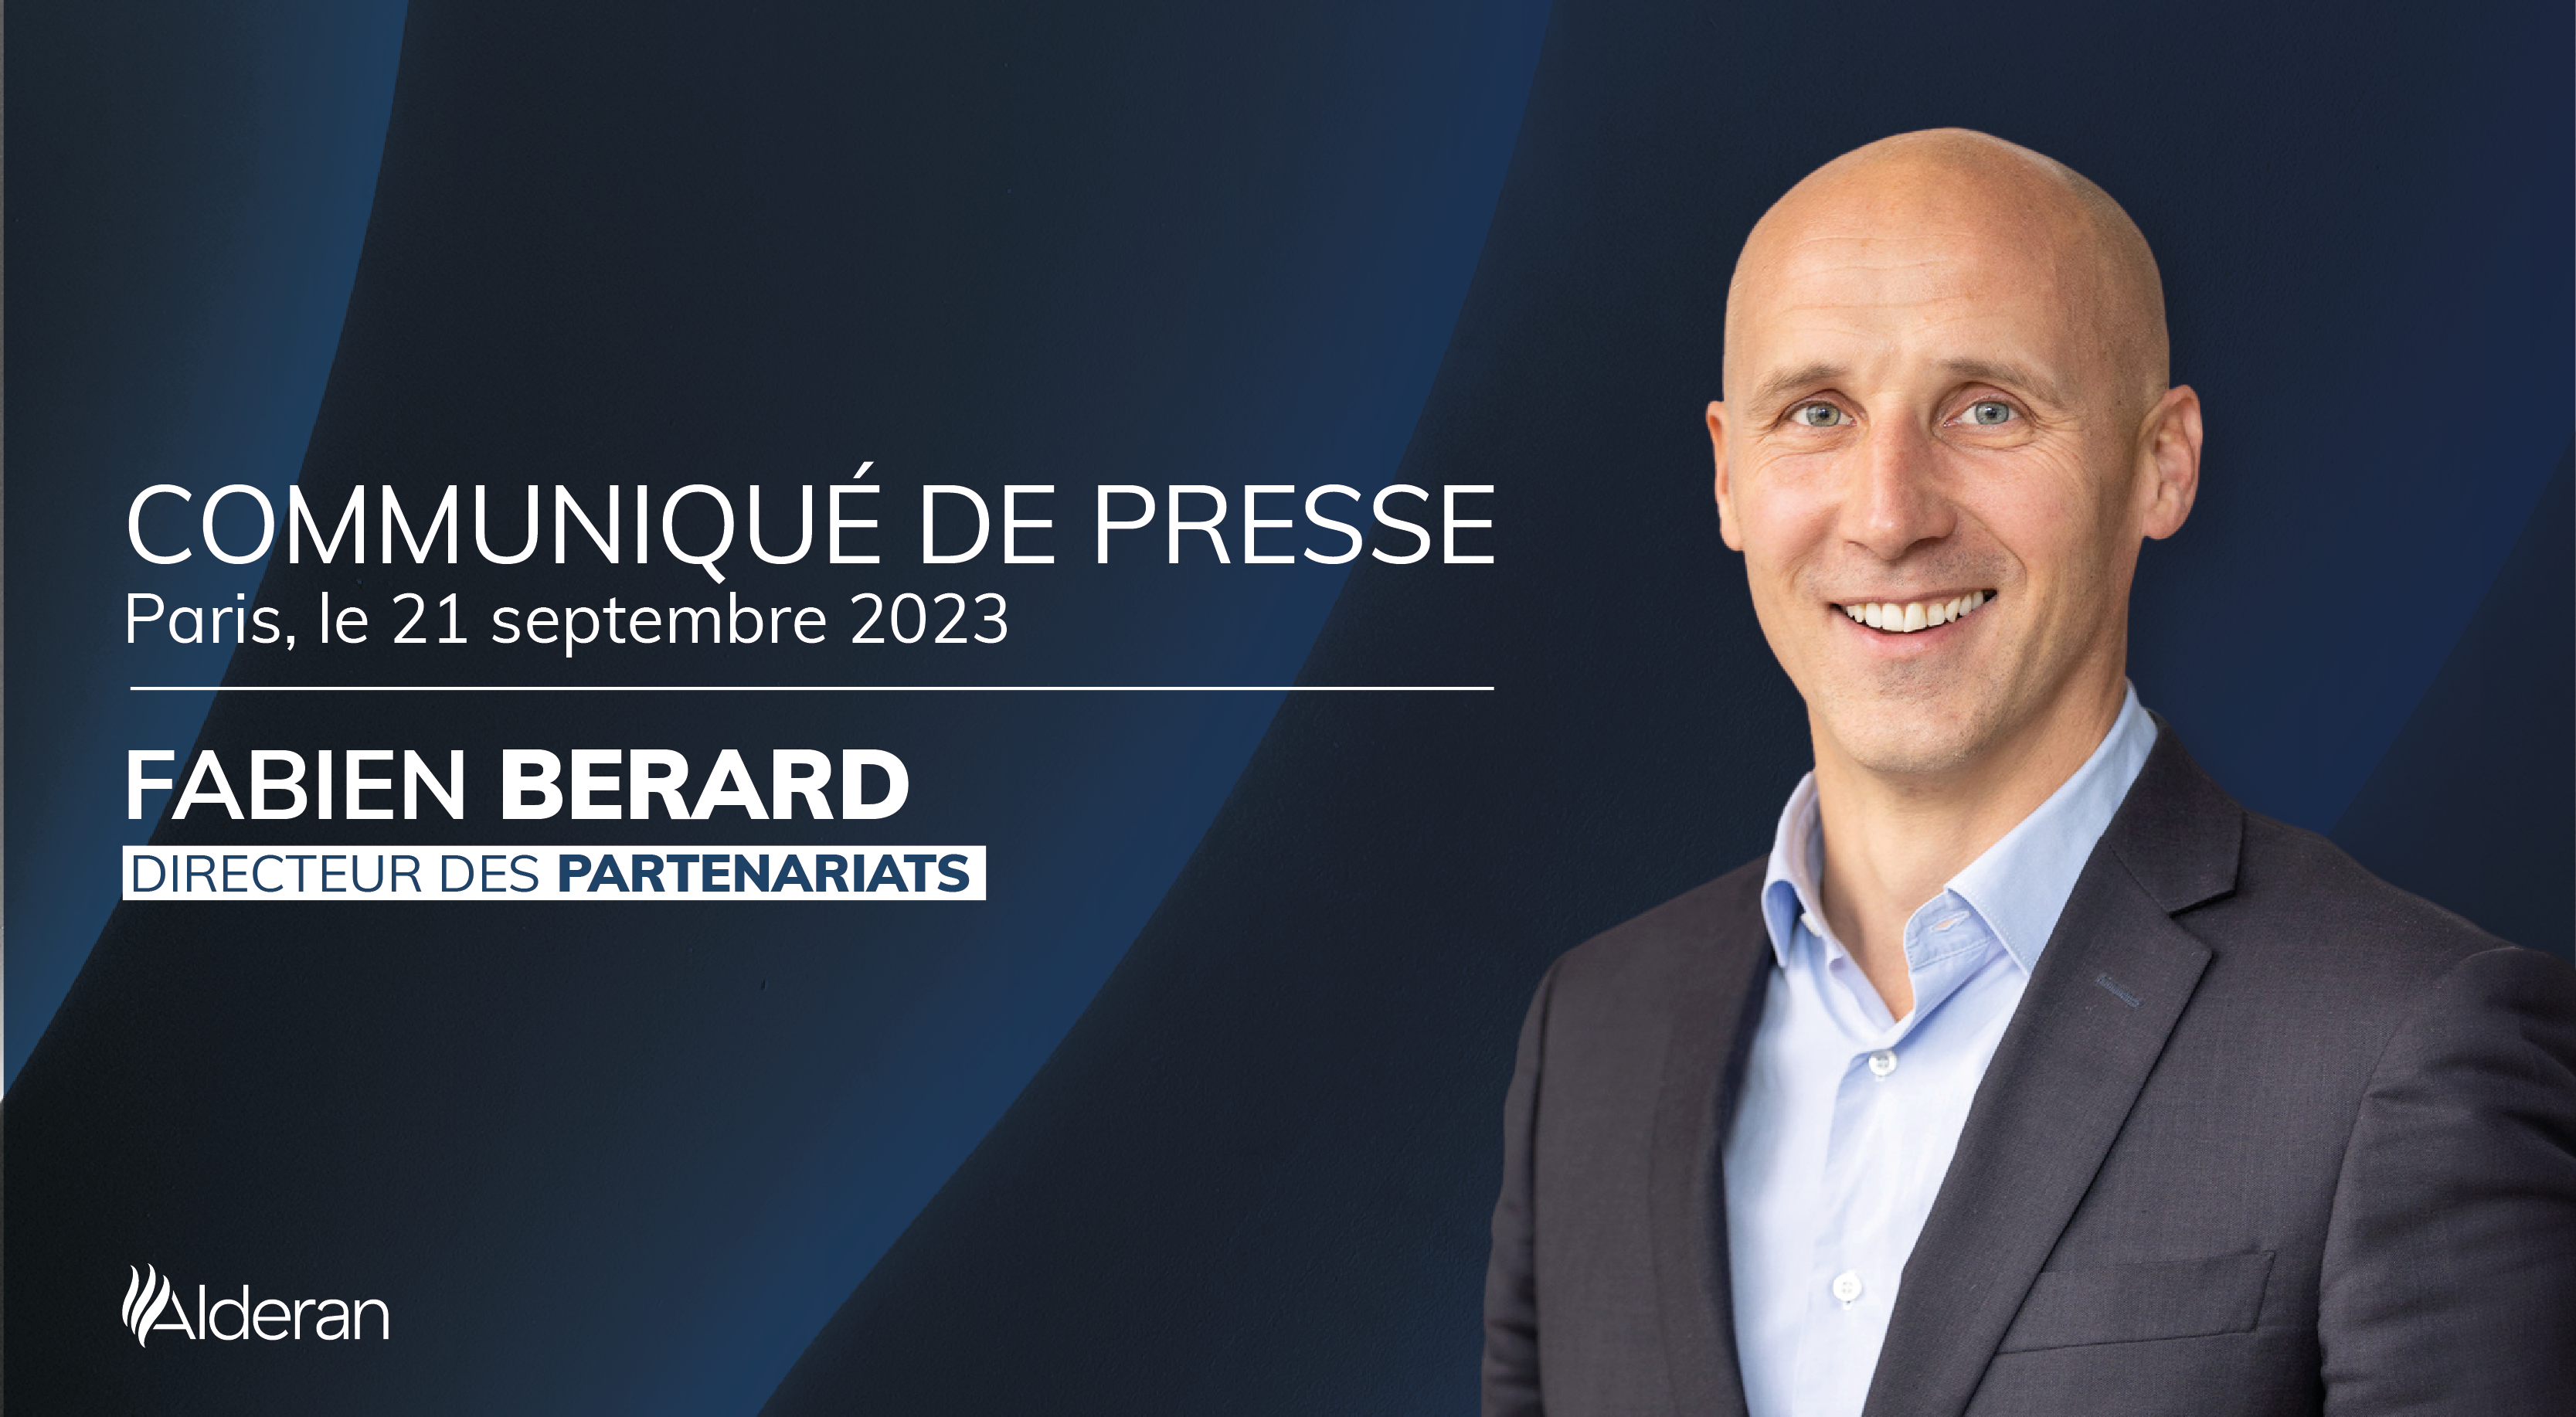 Alderan annonce l’arrivée de Fabien BERARD en tant que Directeur des Partenariats